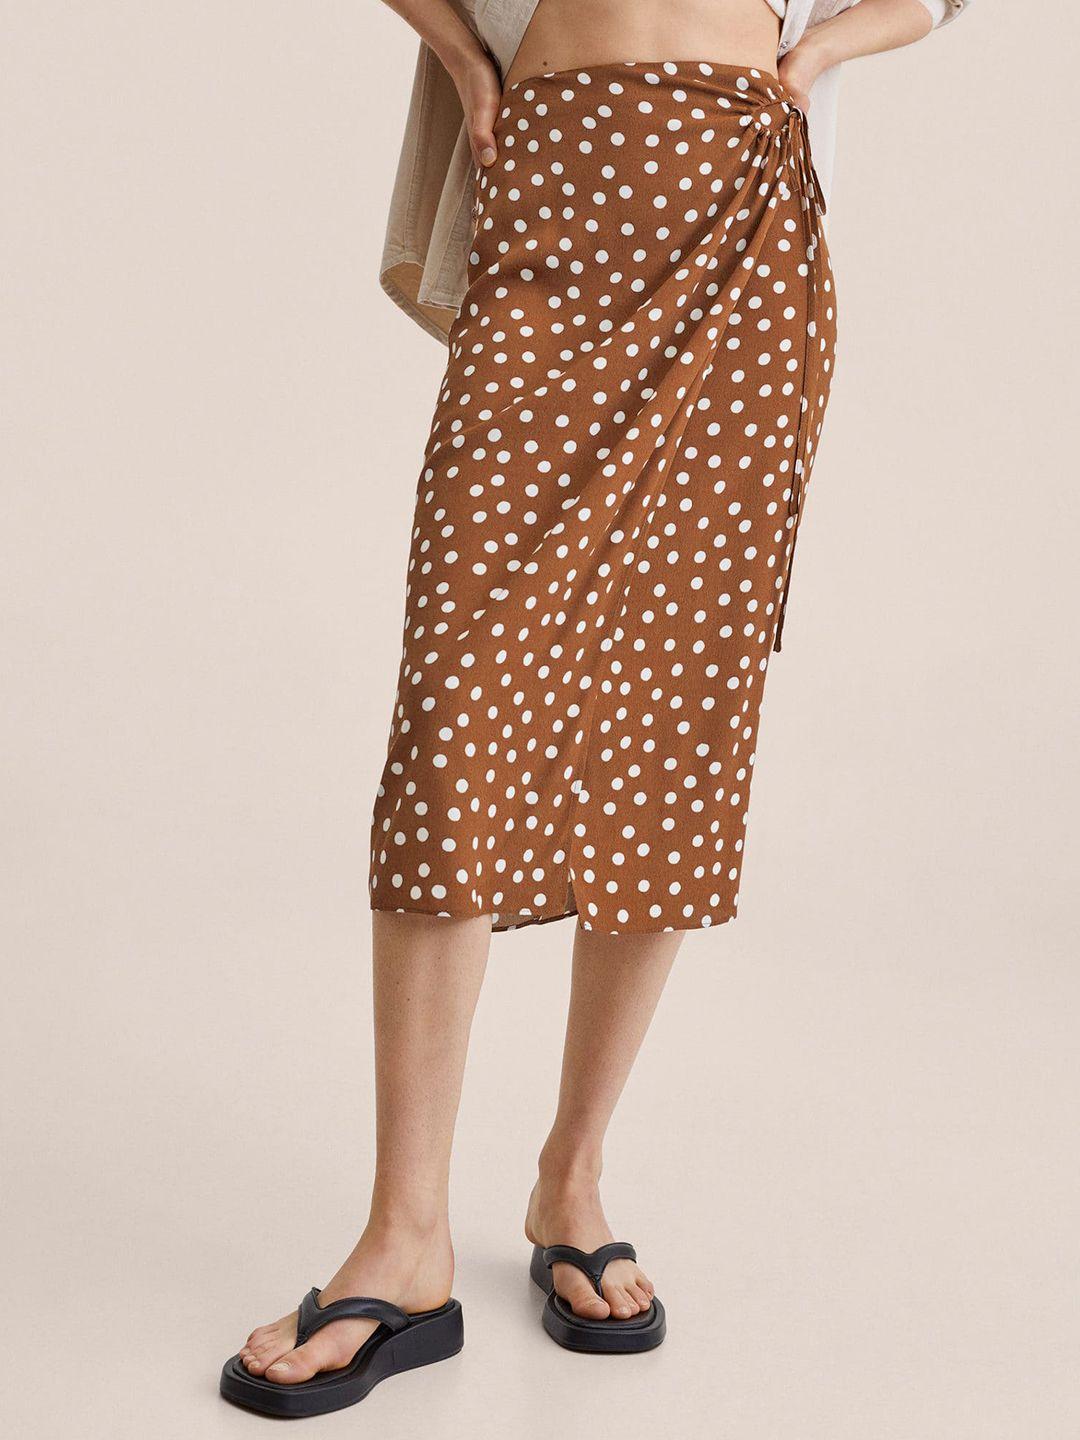 mango-women-brown-and-white-polka-dot-printed-skirt